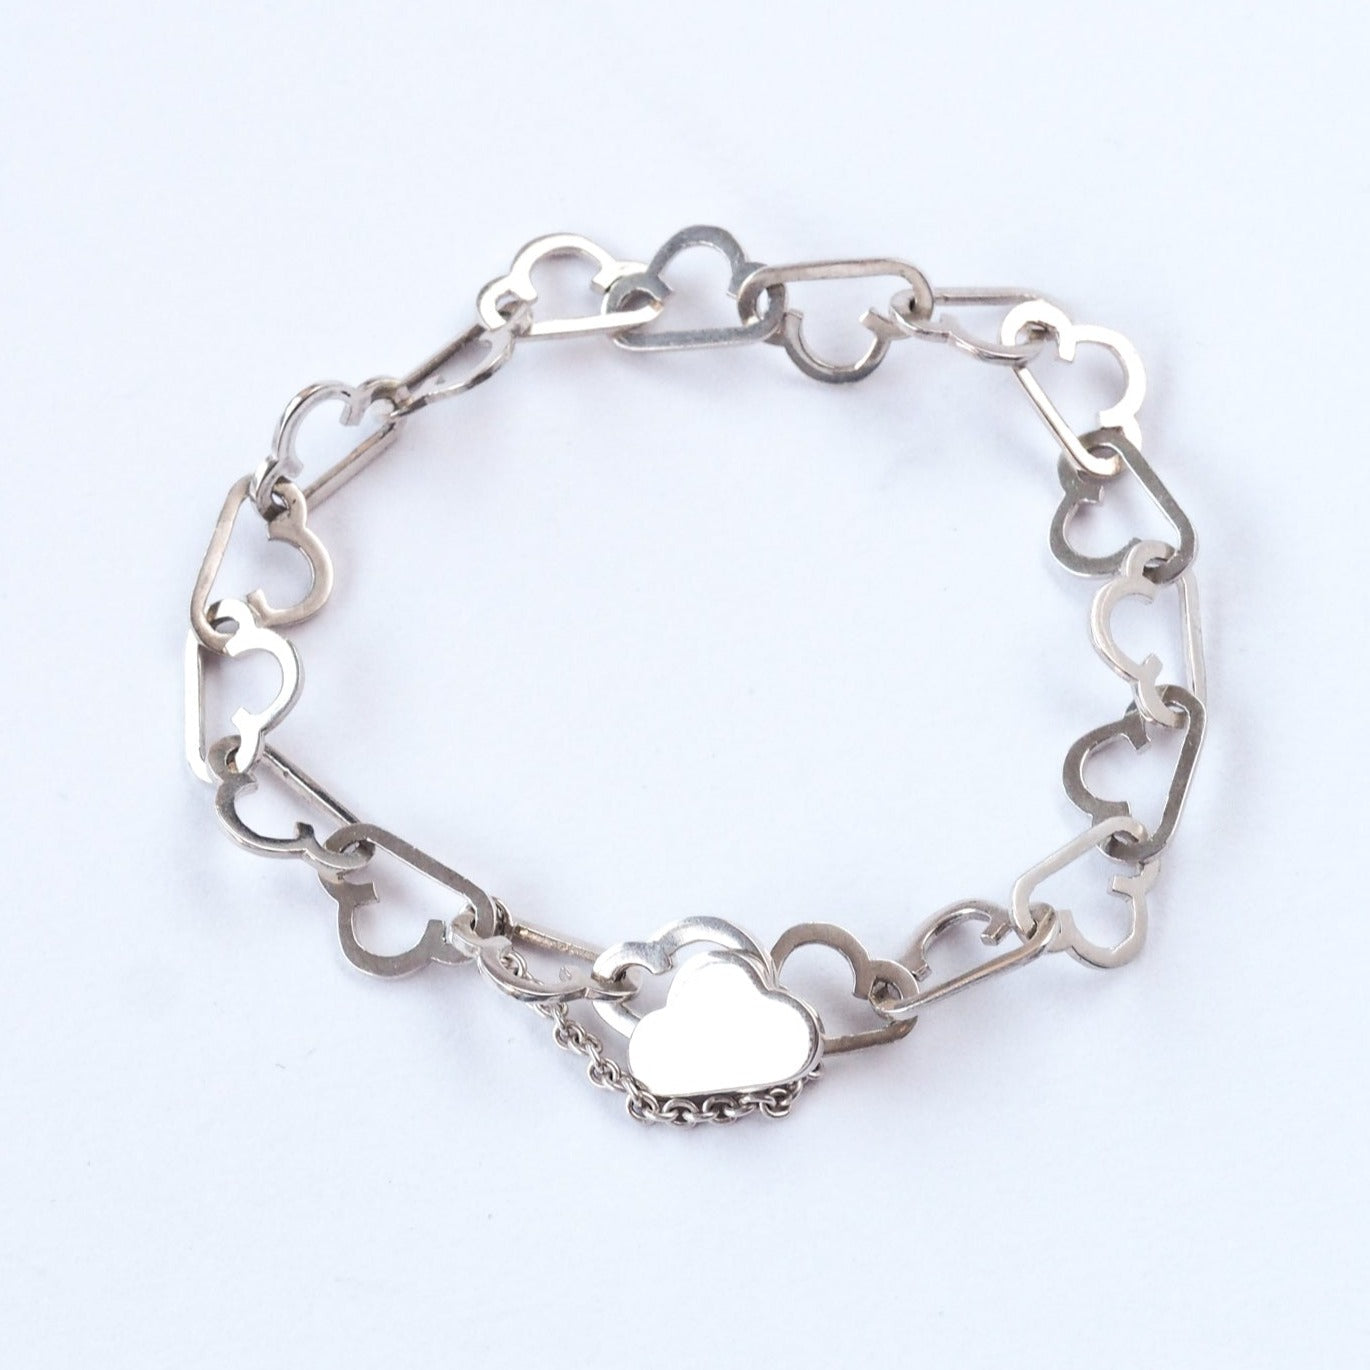 Every Cloud Bracelet - Handmade Sterling Silver